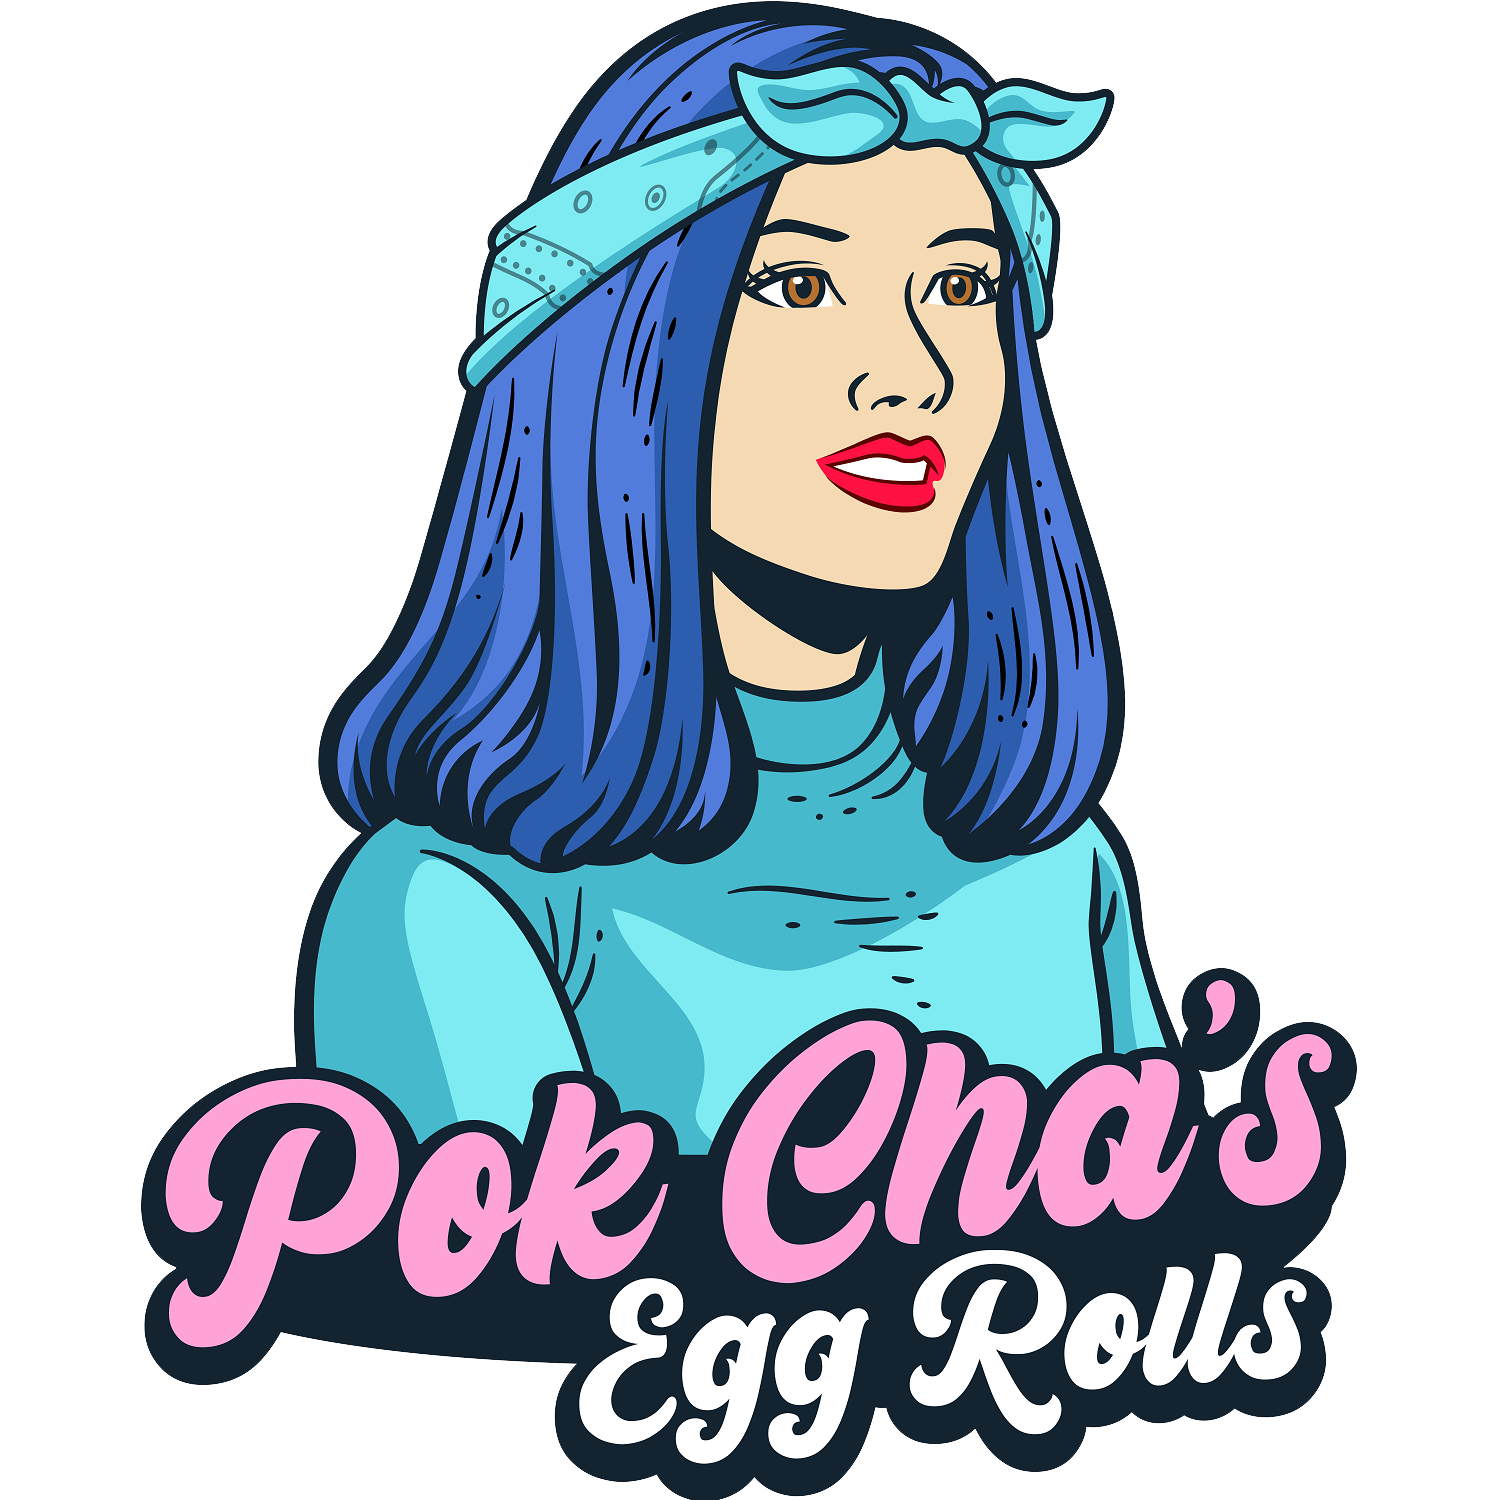 Bringing Pok Cha’s Egg Rolls to you!